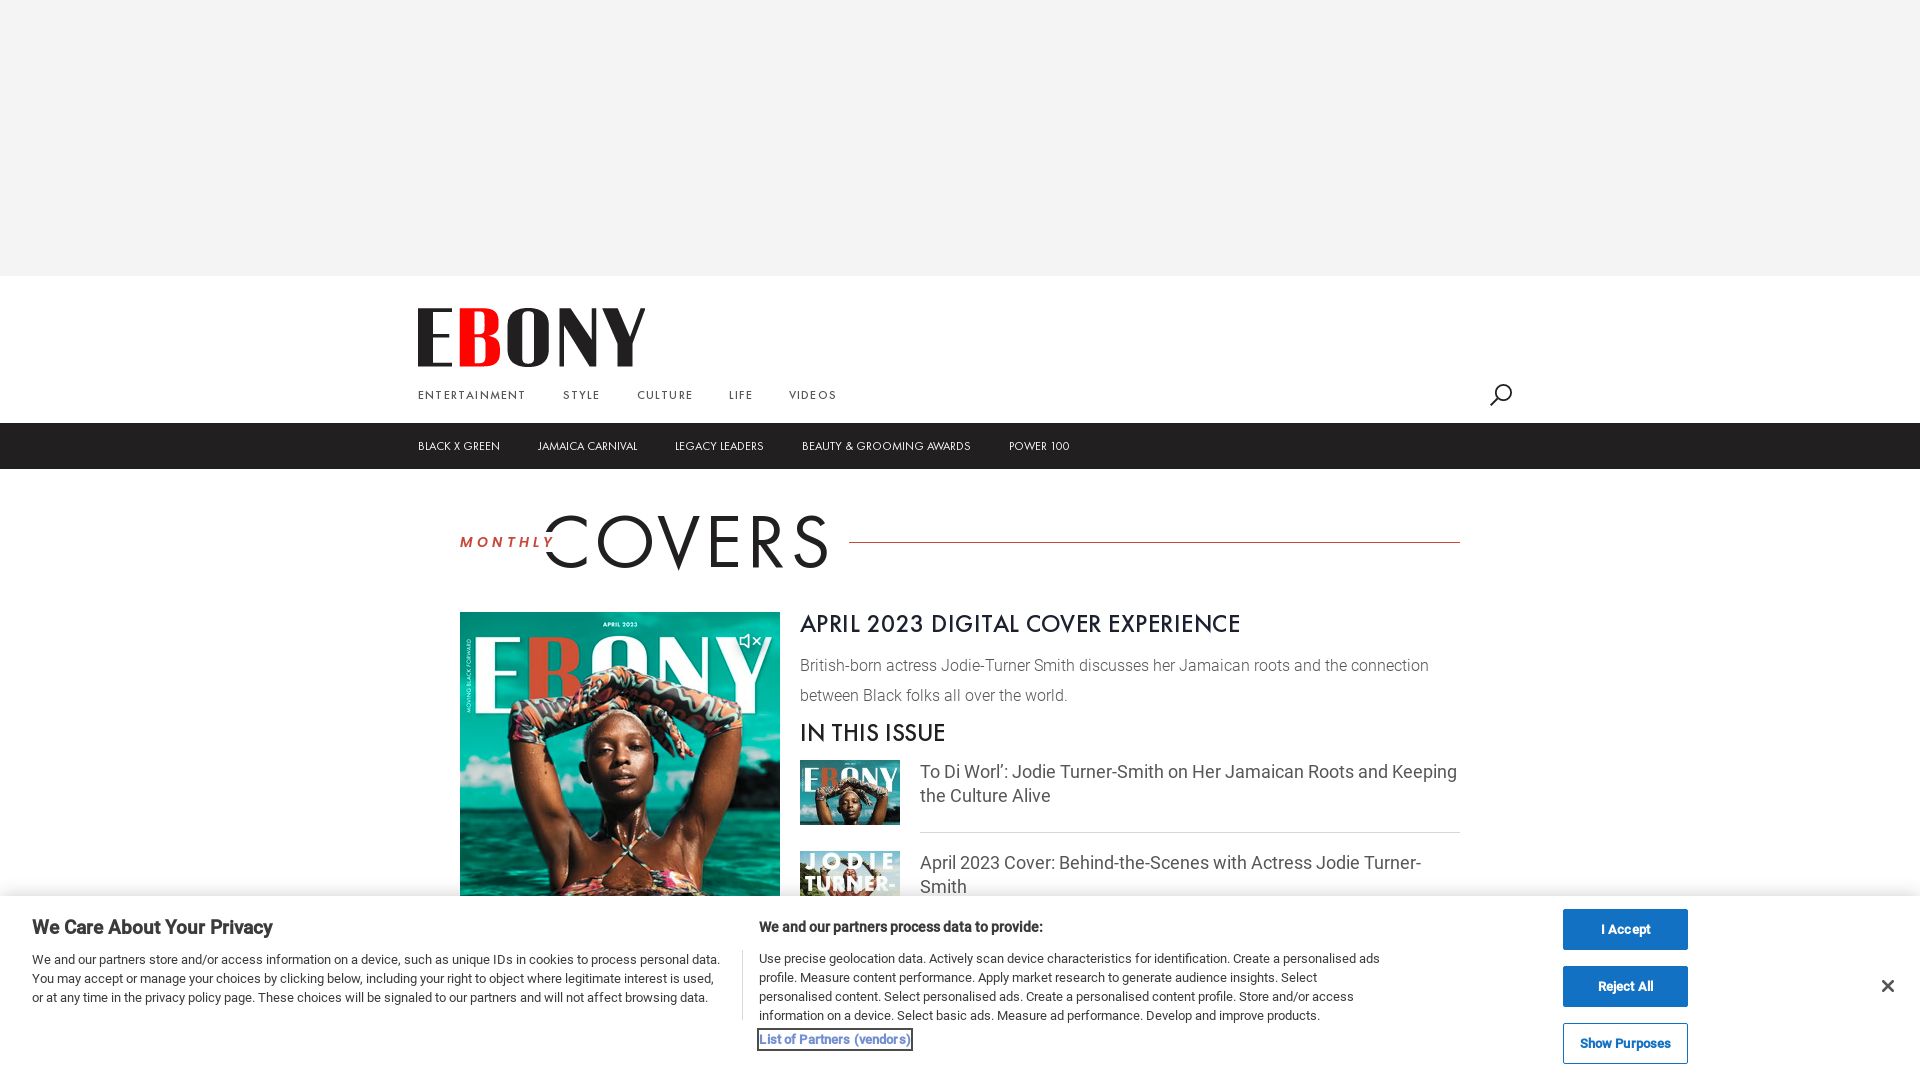 Website status ebony.com is   ONLINE